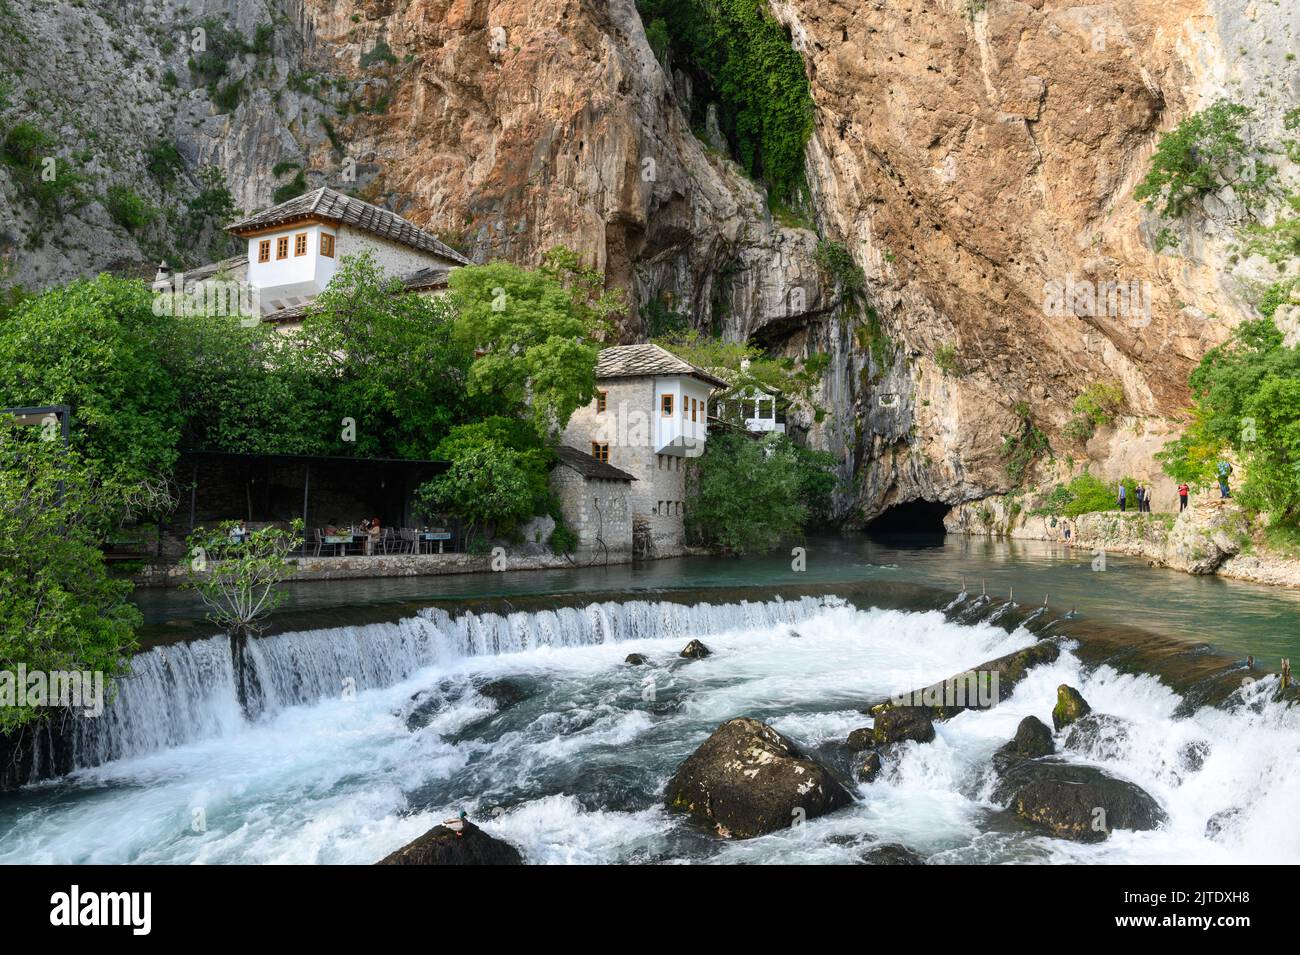 Blagaj Tekija (un monastero derviscio) alla sorgente del fiume Buna. Blagaj, Bosnia-Erzegovina. Foto Stock